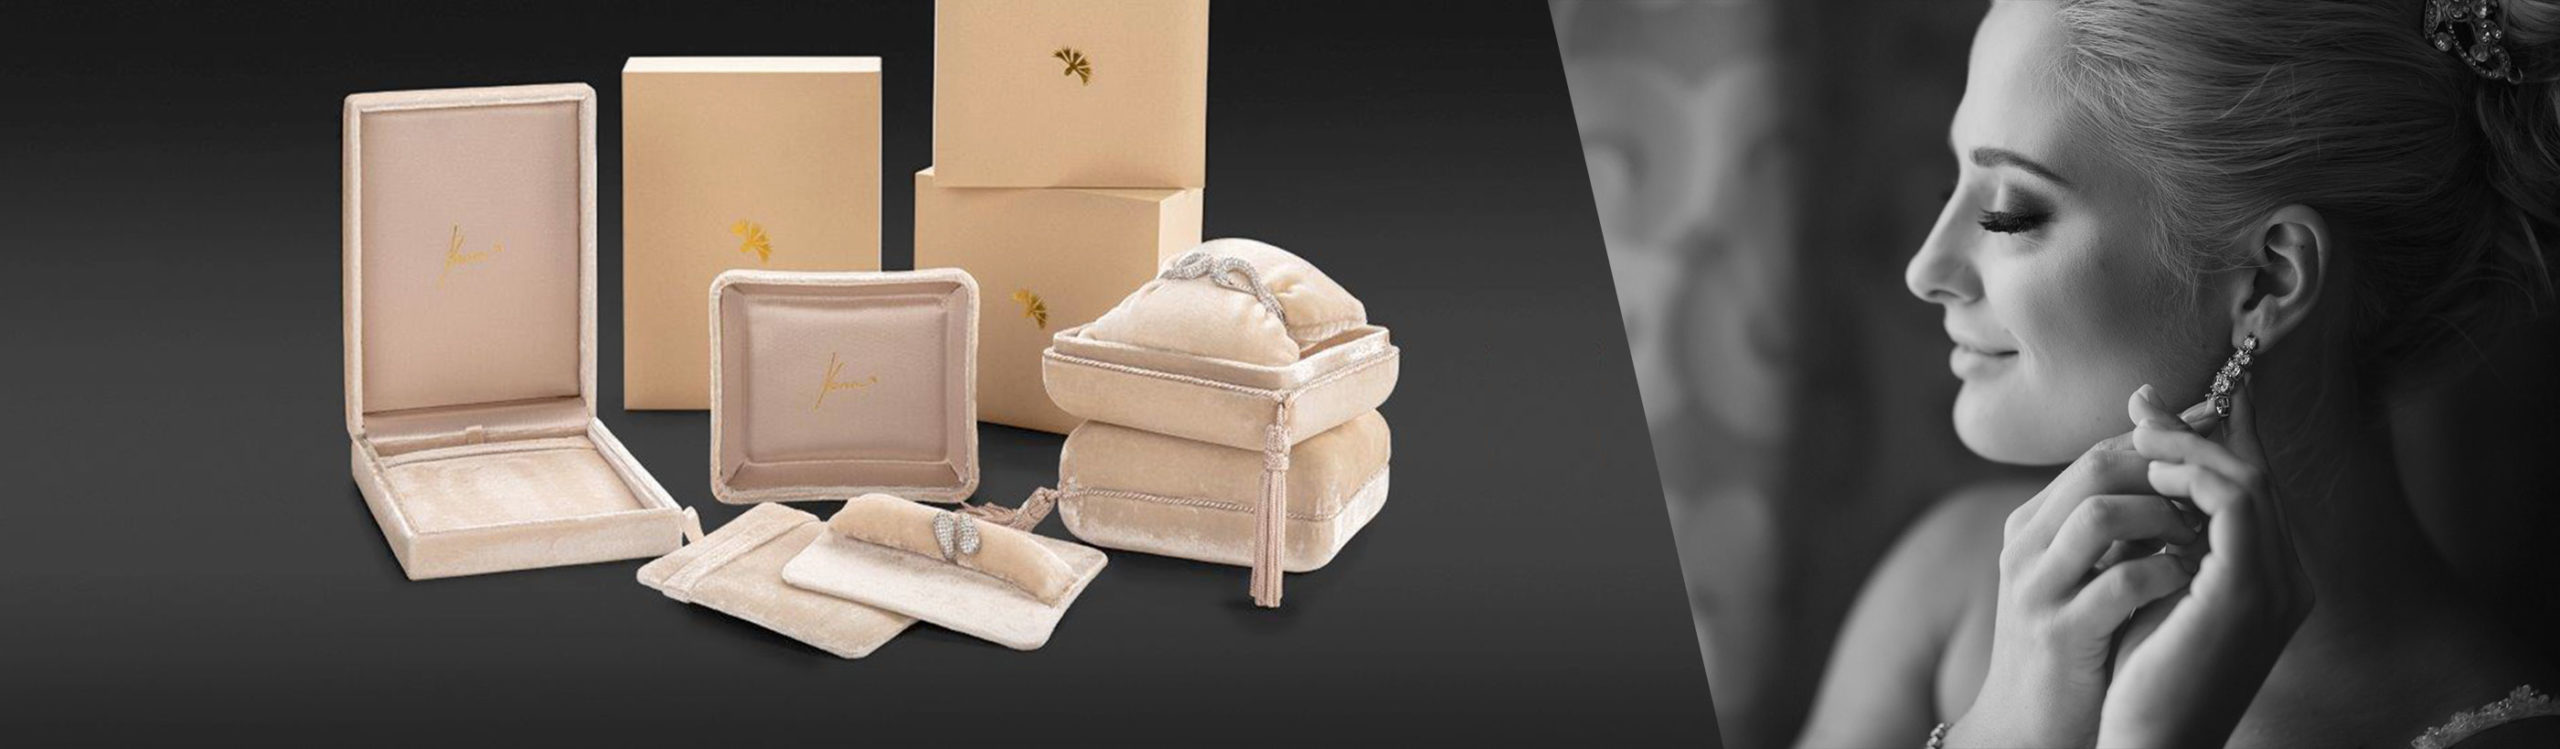 Luxury italian jewelry boxes - Handcrafted jewelry boxes - Made in Italy  high end jewelry boxes - italian jewelry box manufacturer - Agresti